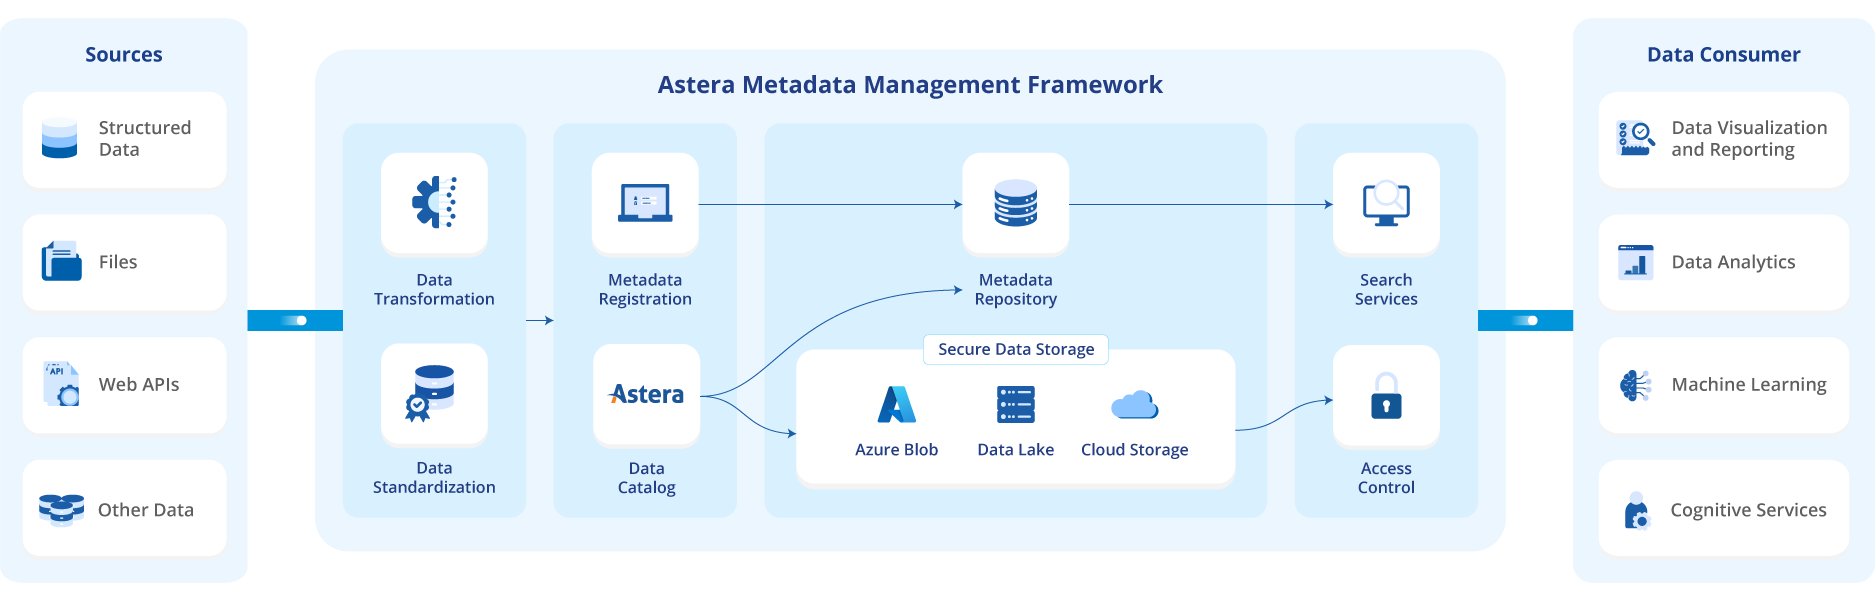 Astera Metadata Management Framework